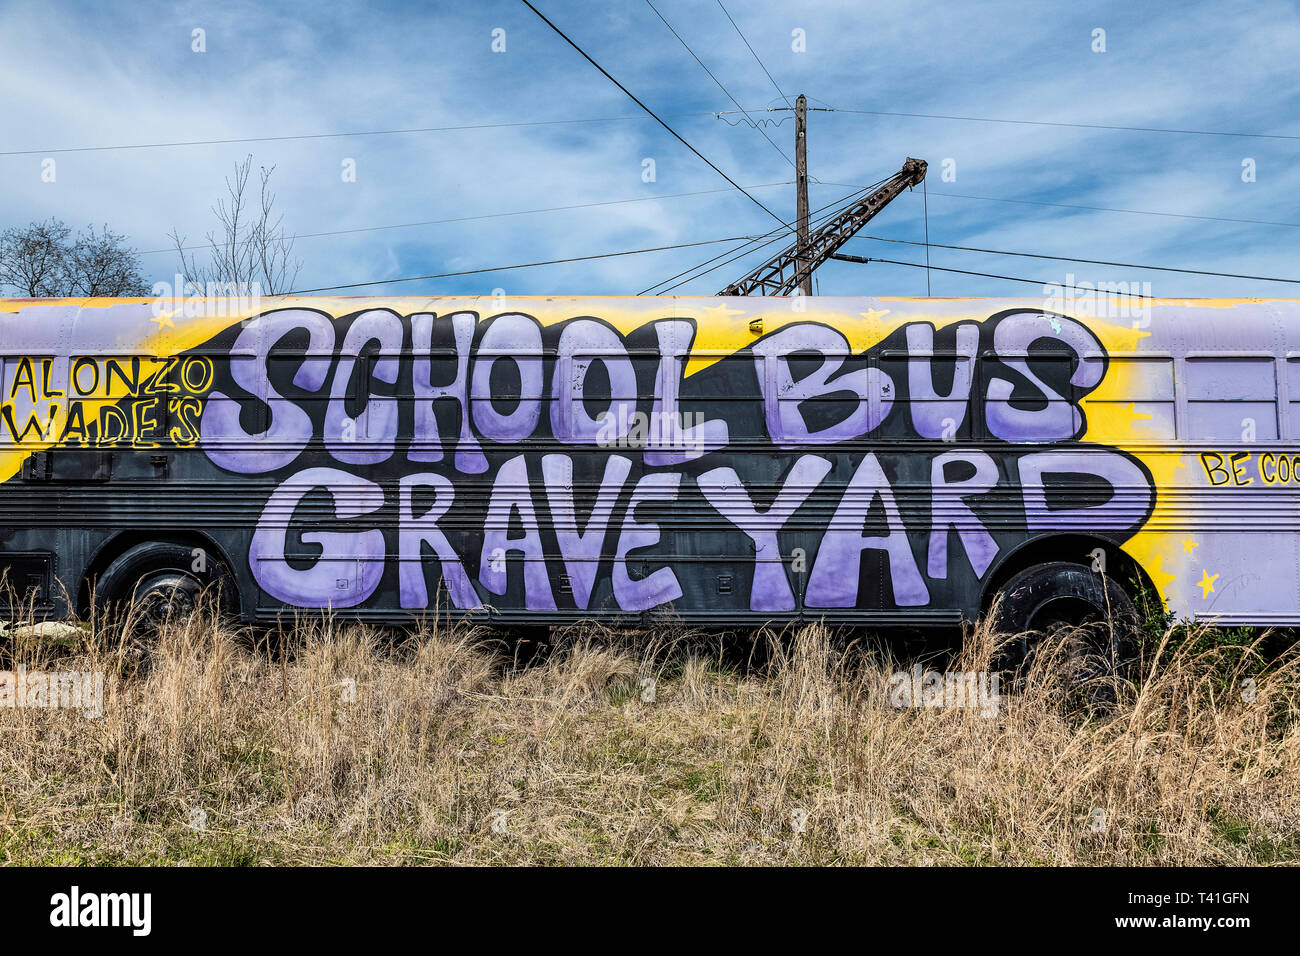 Alonzo Wade's School Bus Graveyard, Alto, Georgia. Stock Photo